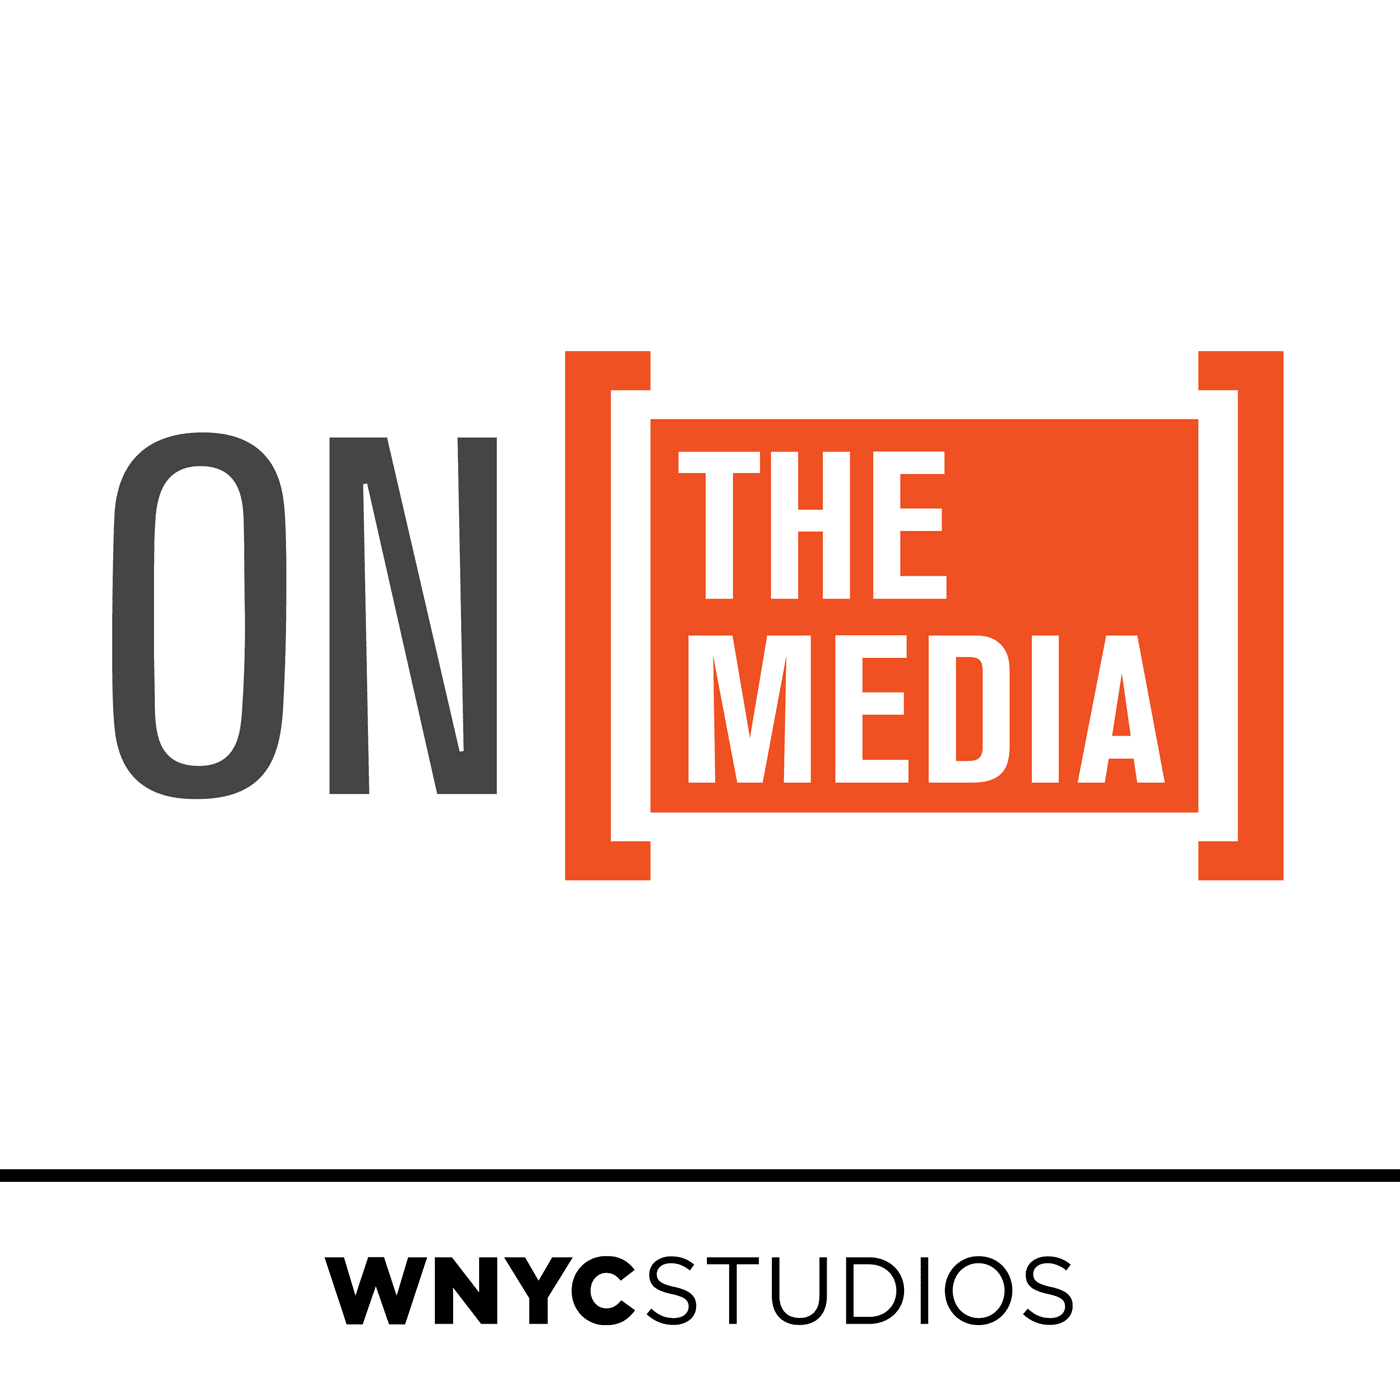 On the Media:WNYC Studios (wnycdigital@gmail.com)